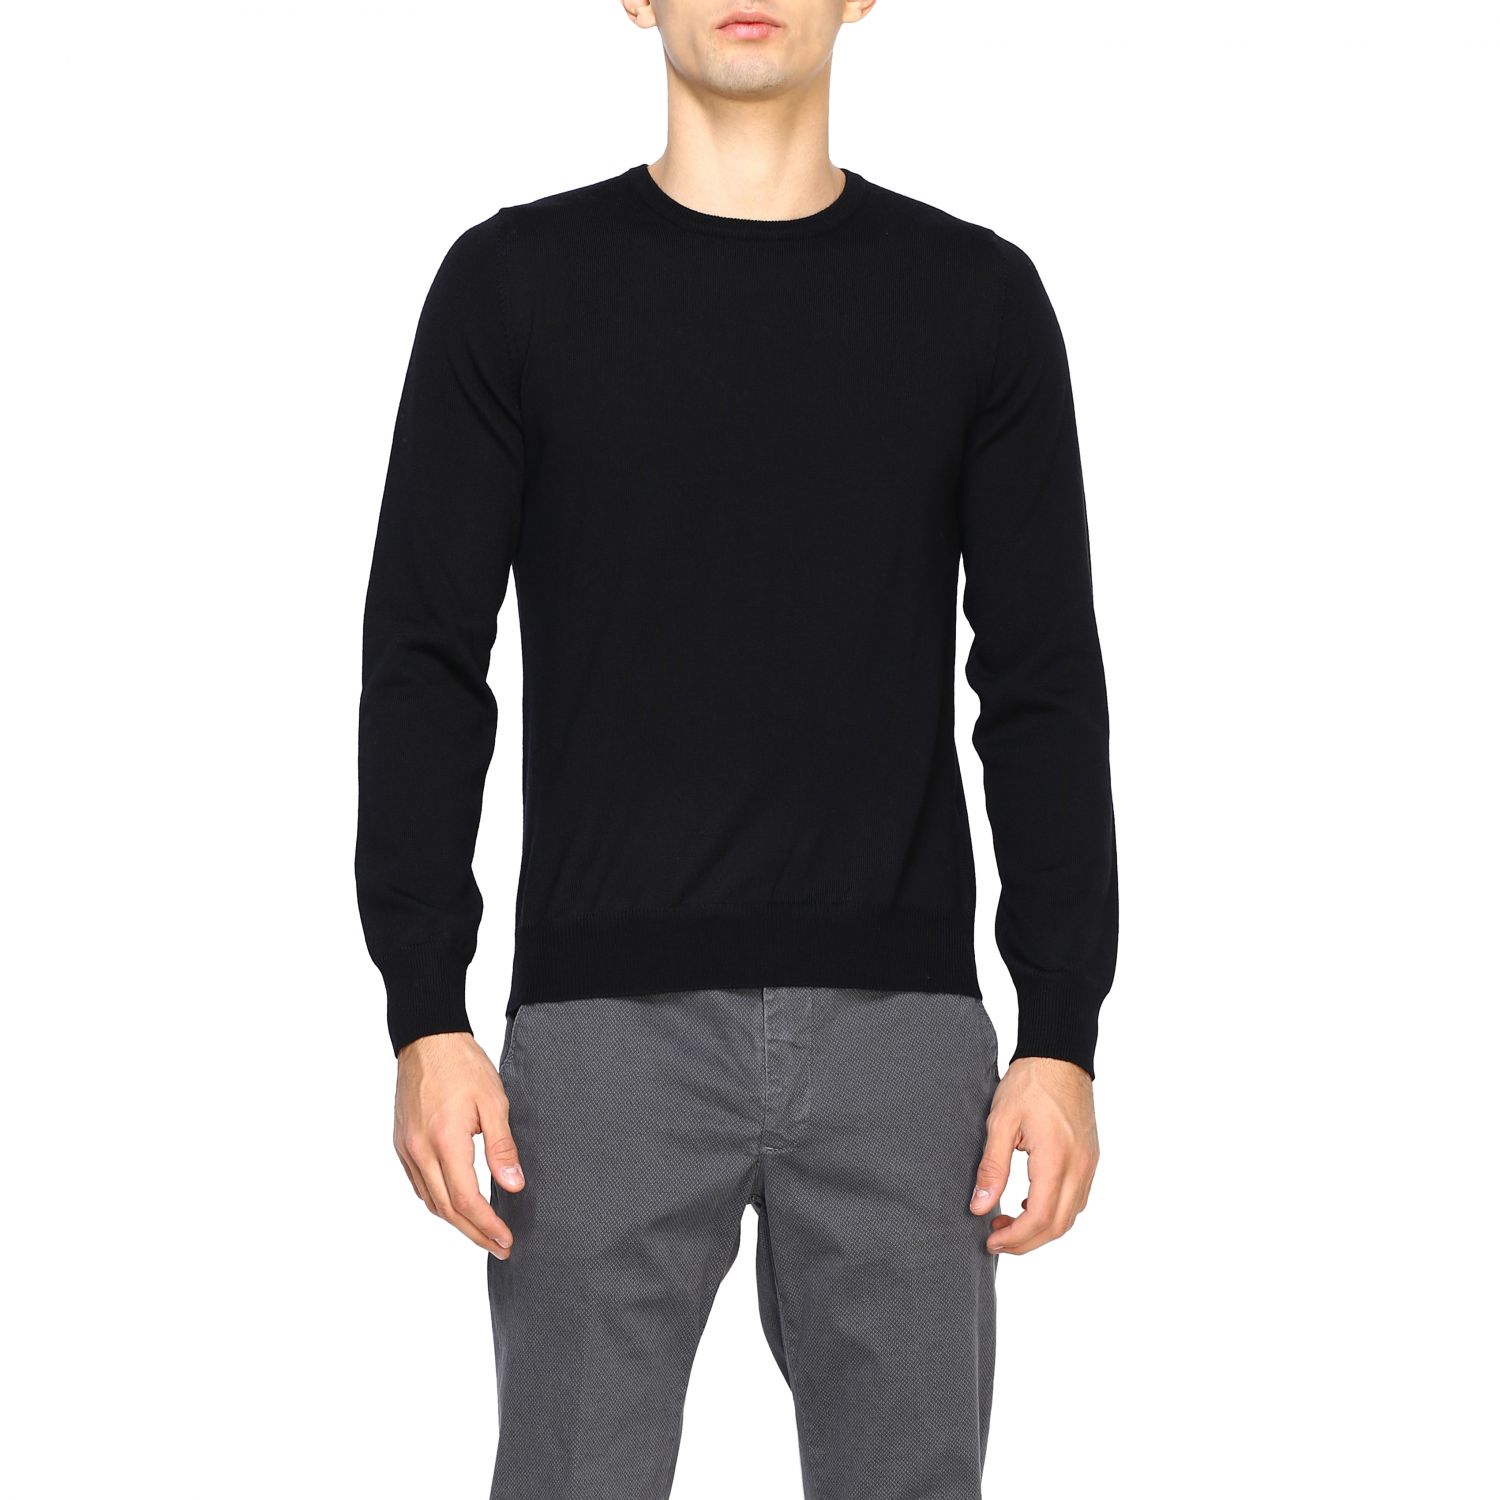 Gran Sasso Outlet: sweatshirt for man - Black | Gran Sasso sweatshirt ...